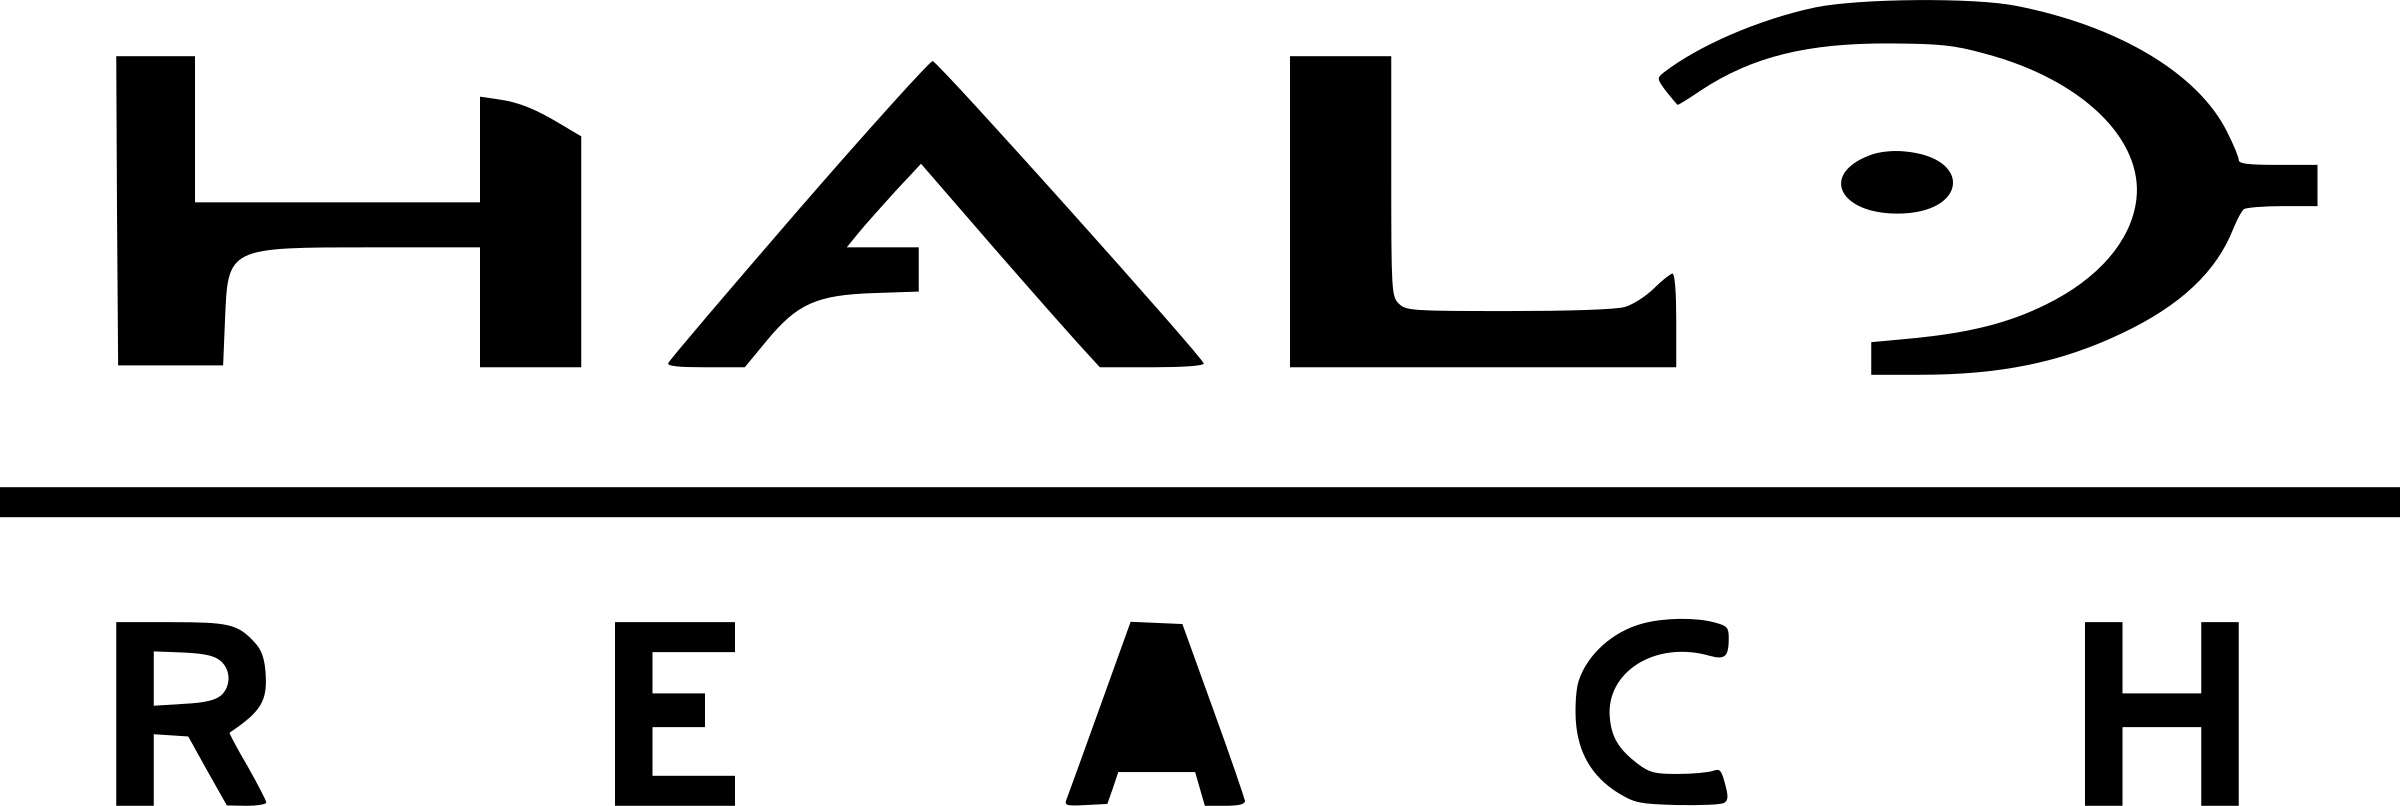 Halo Logo Background PNG